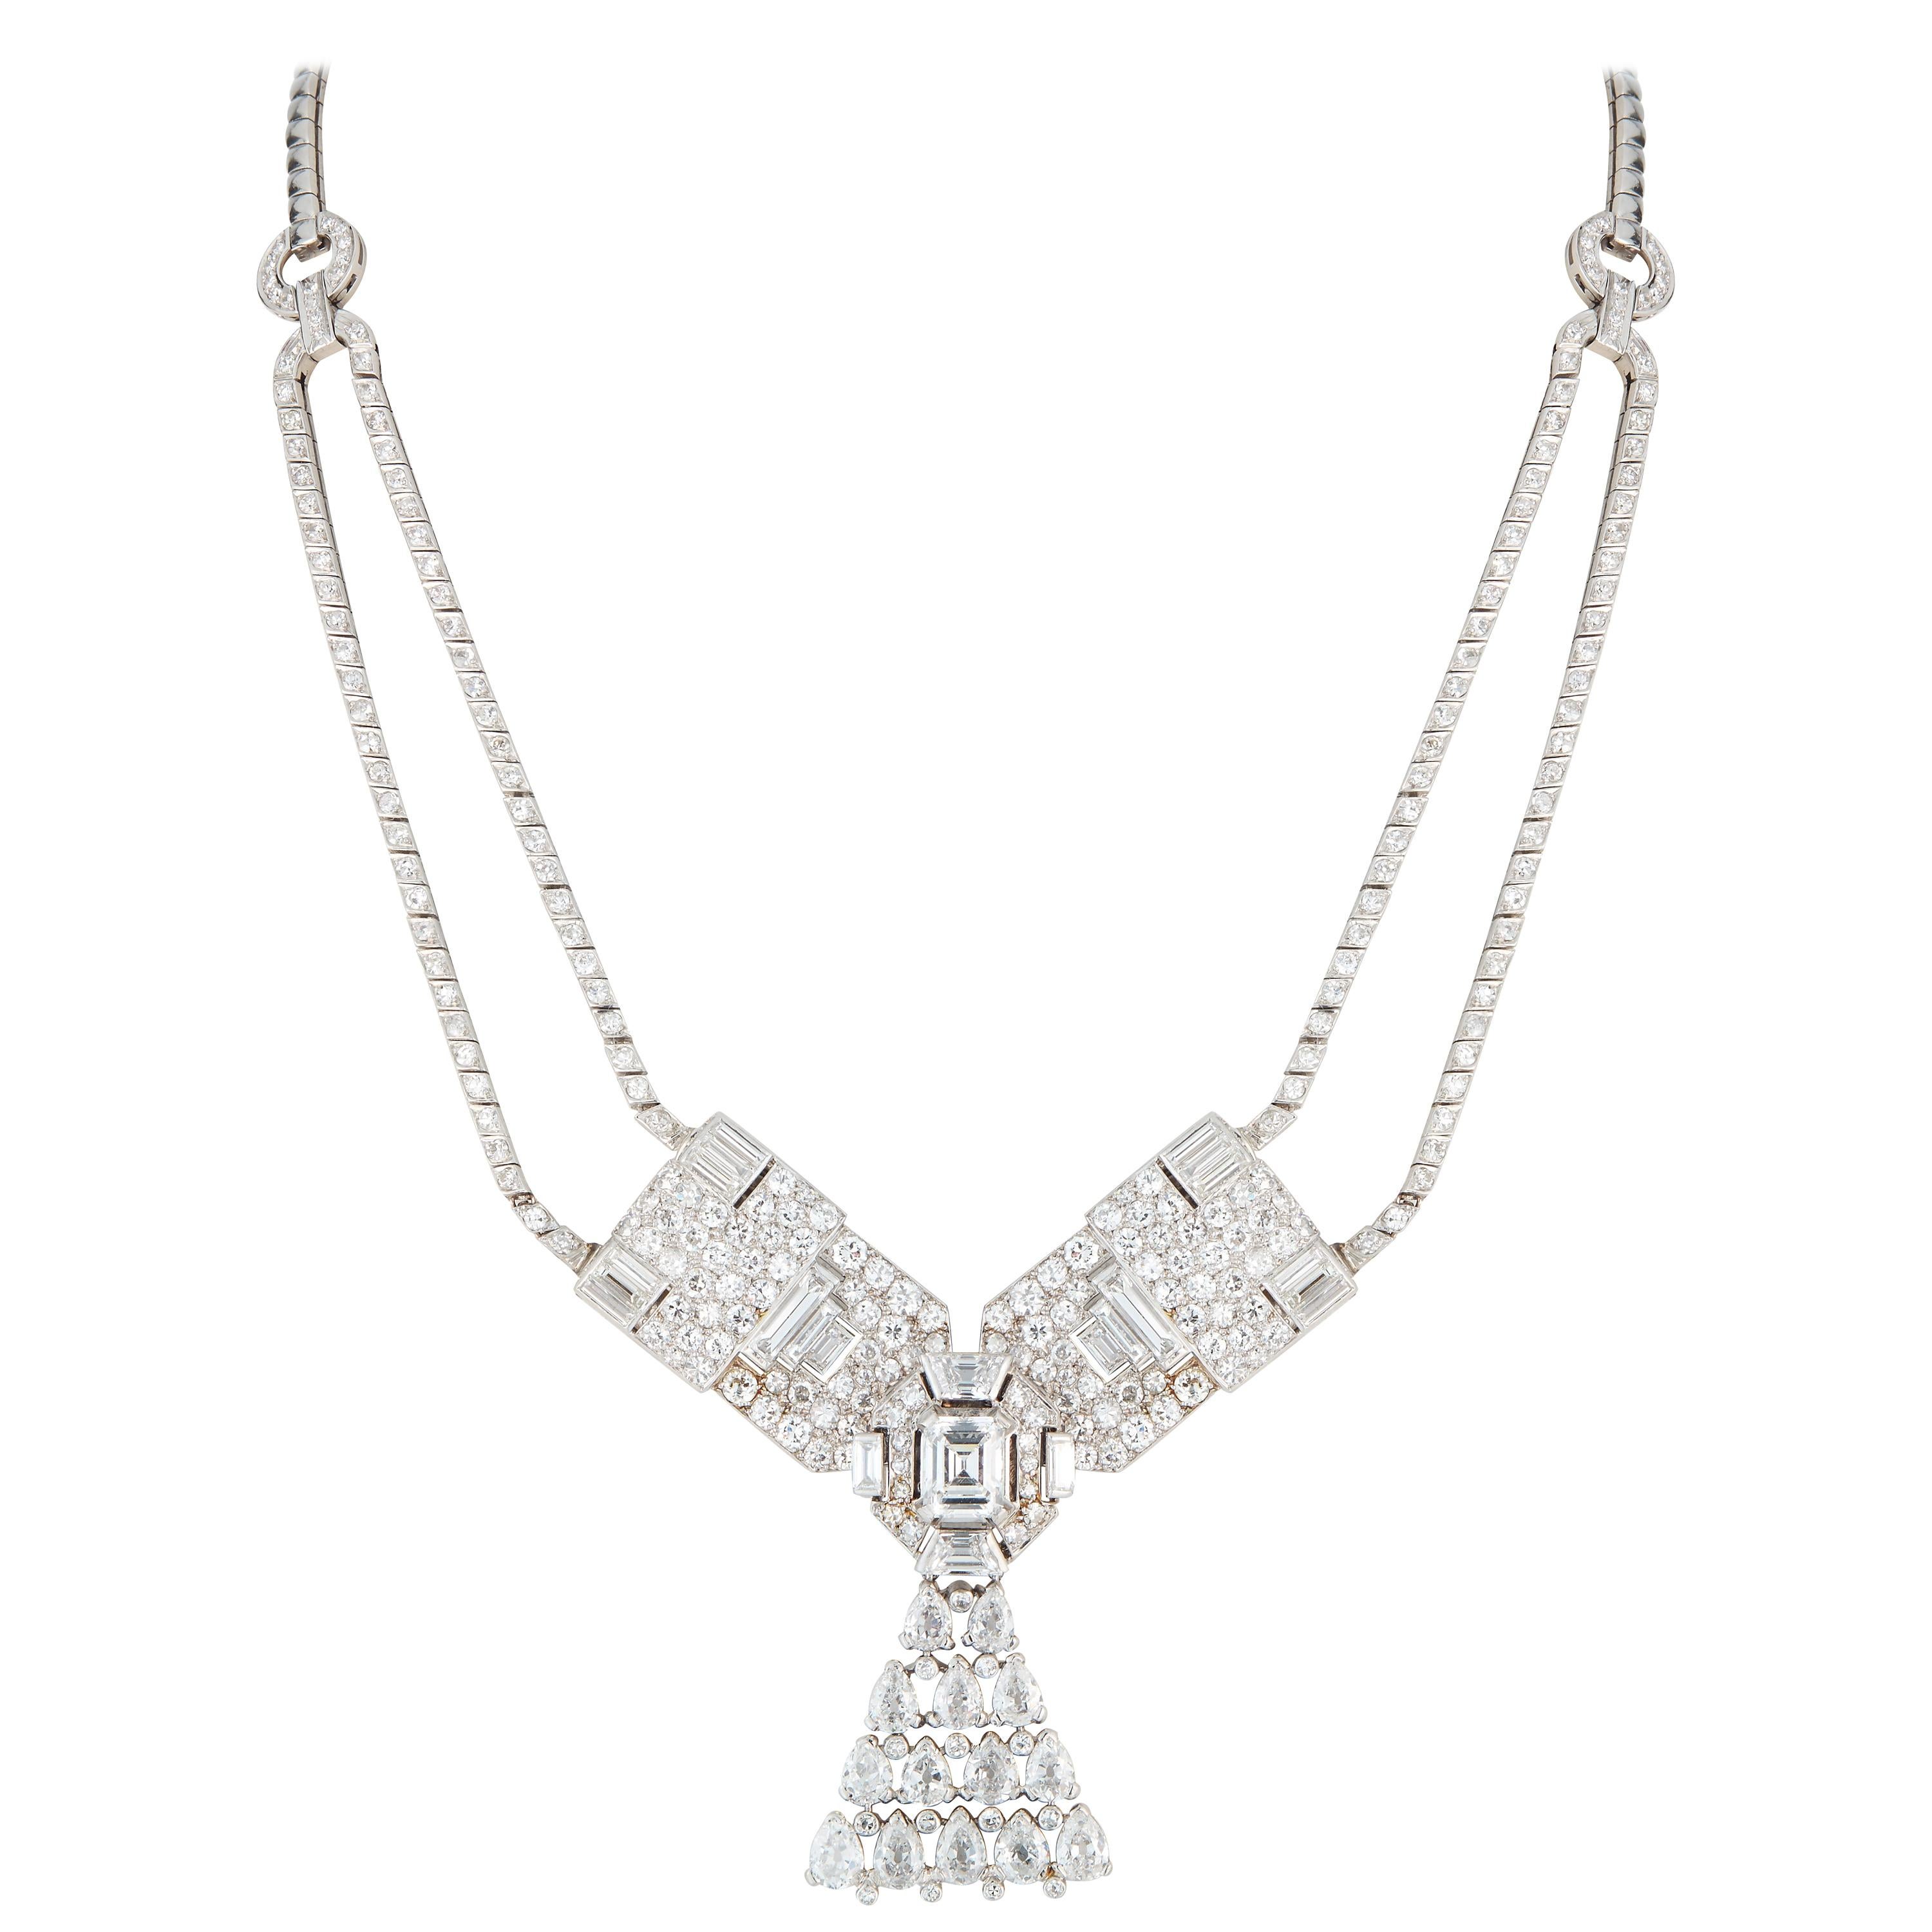 Art Deco Cartier Diamond Brooch, Convertible into a Necklace